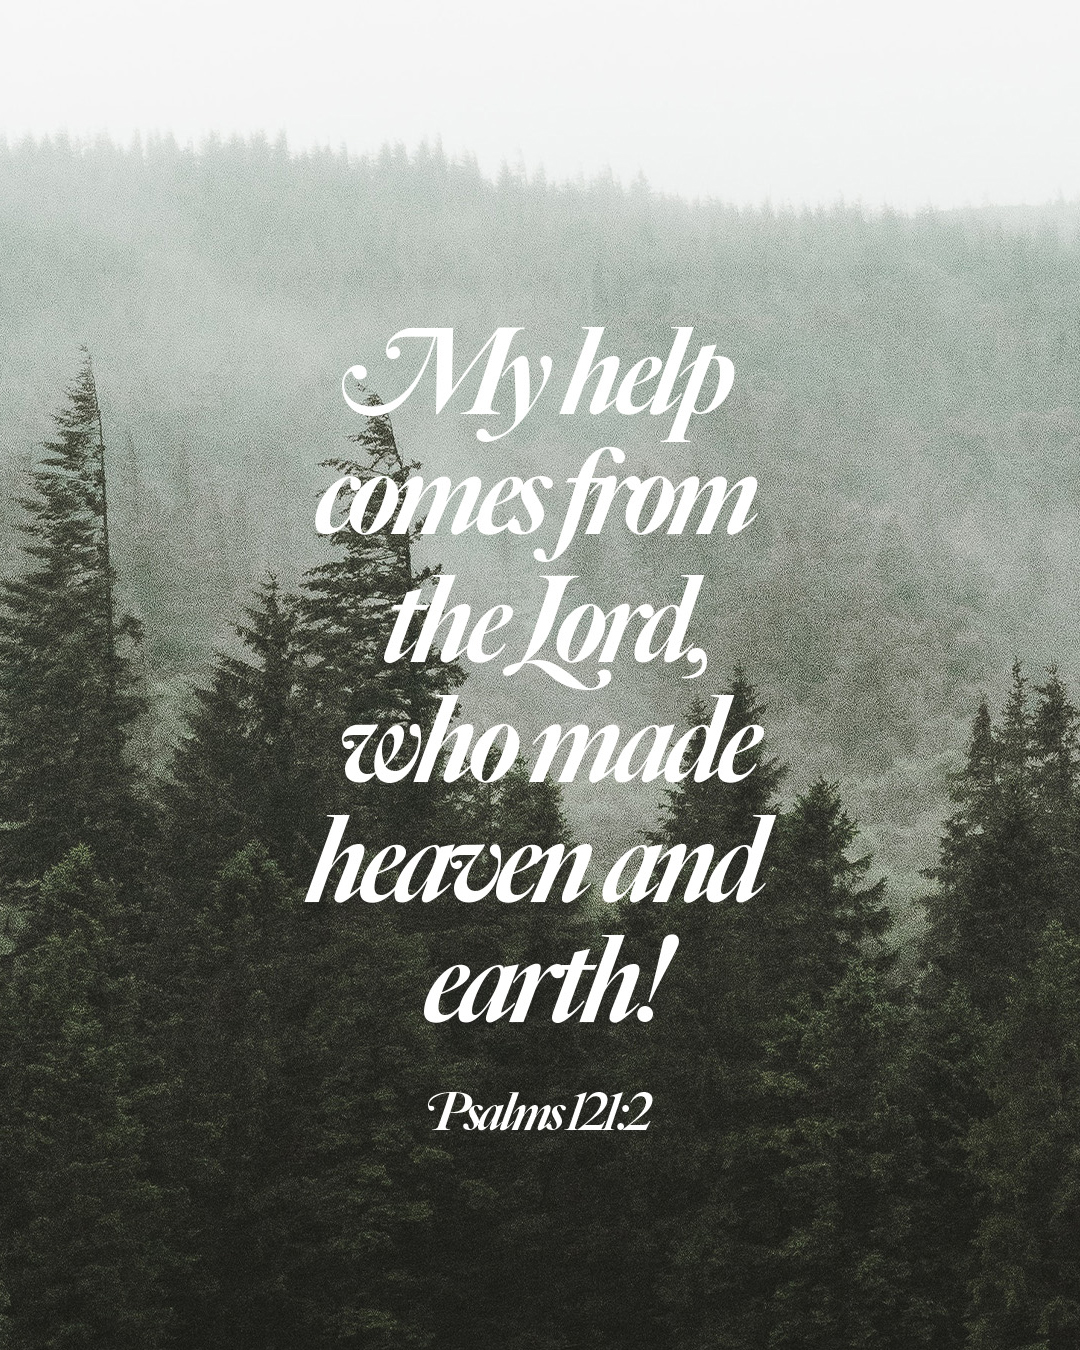 Psalm 121:2